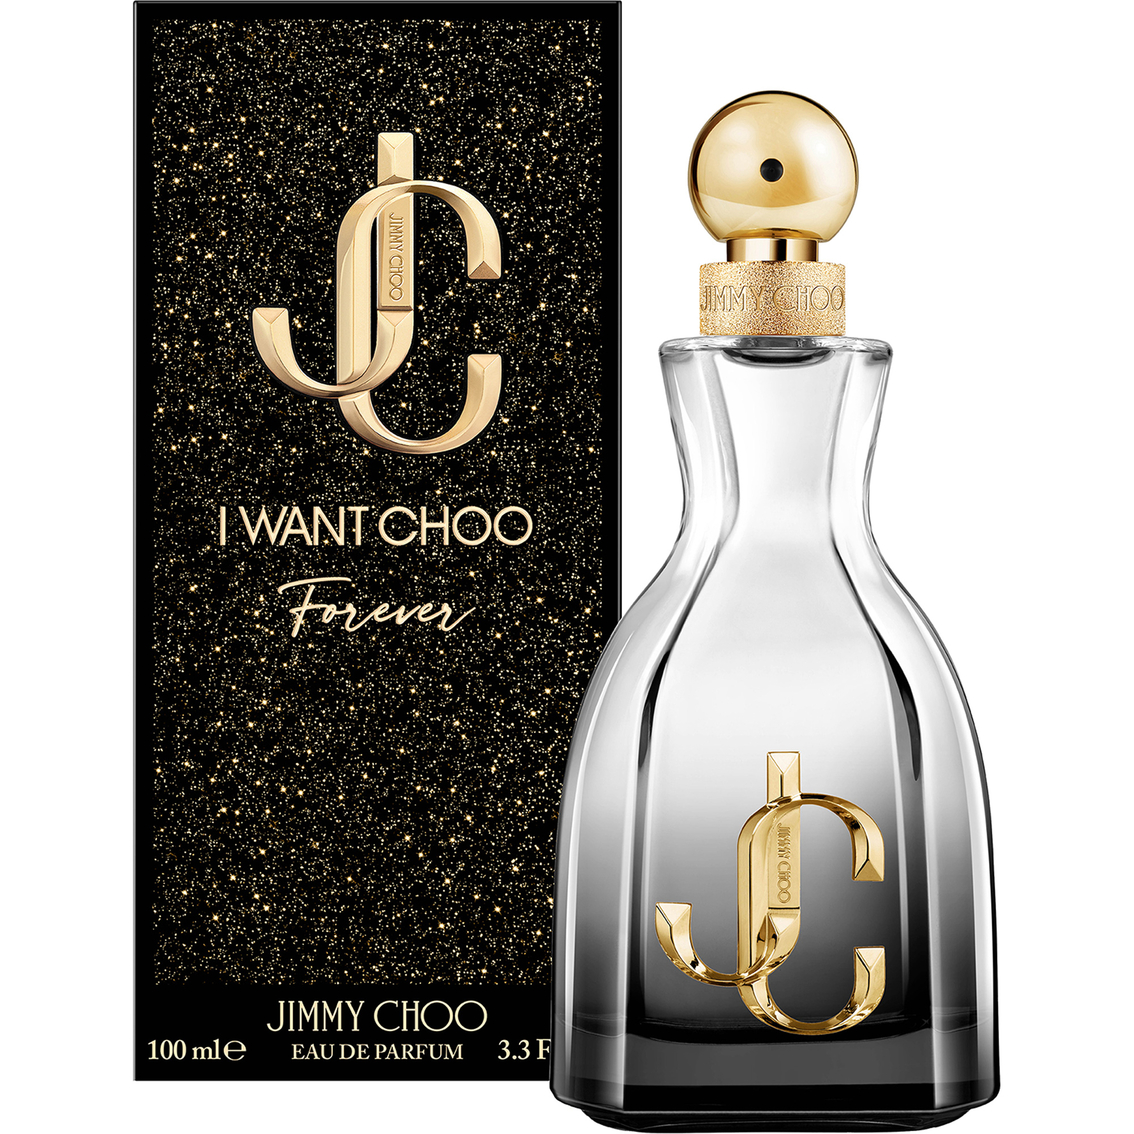 Jimmy Choo I Want Choo Forever Eau de Parfum - Image 2 of 2